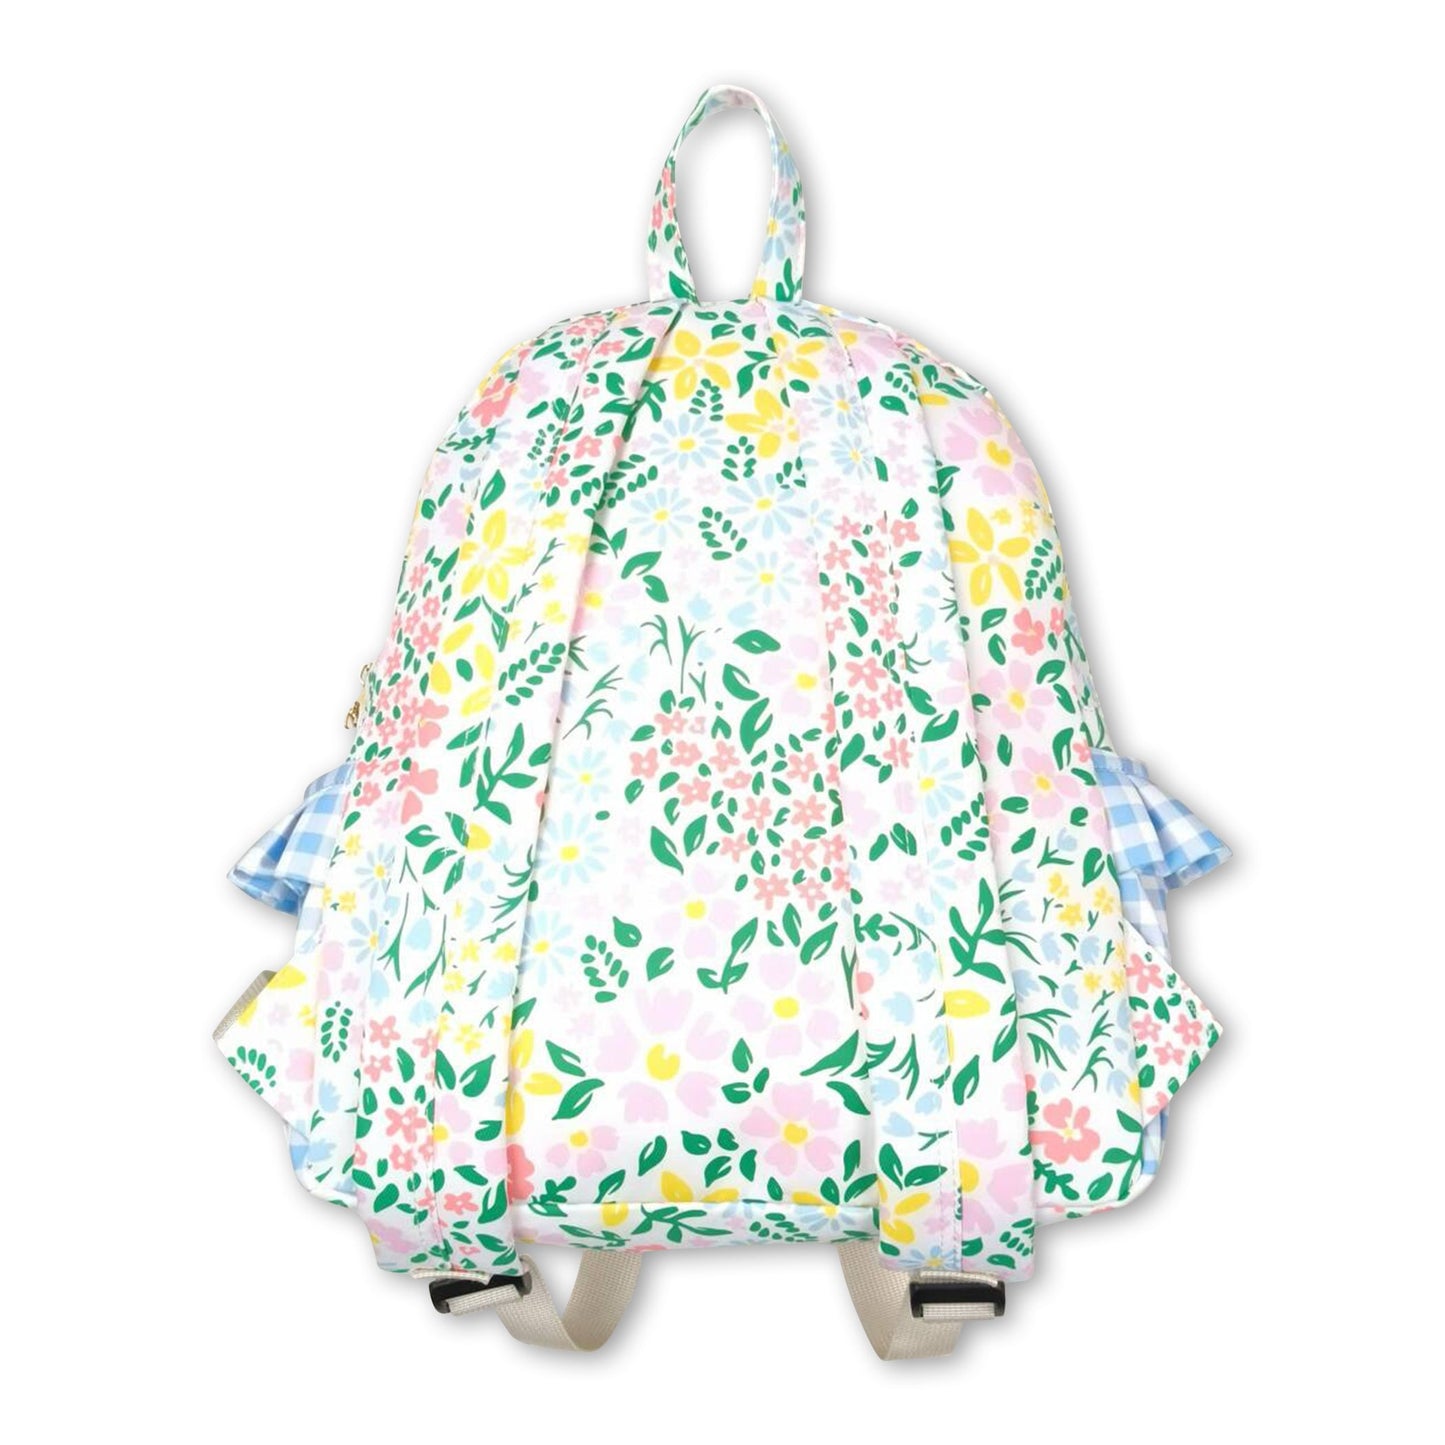 Floral plaid ruffle cute little girls backpack